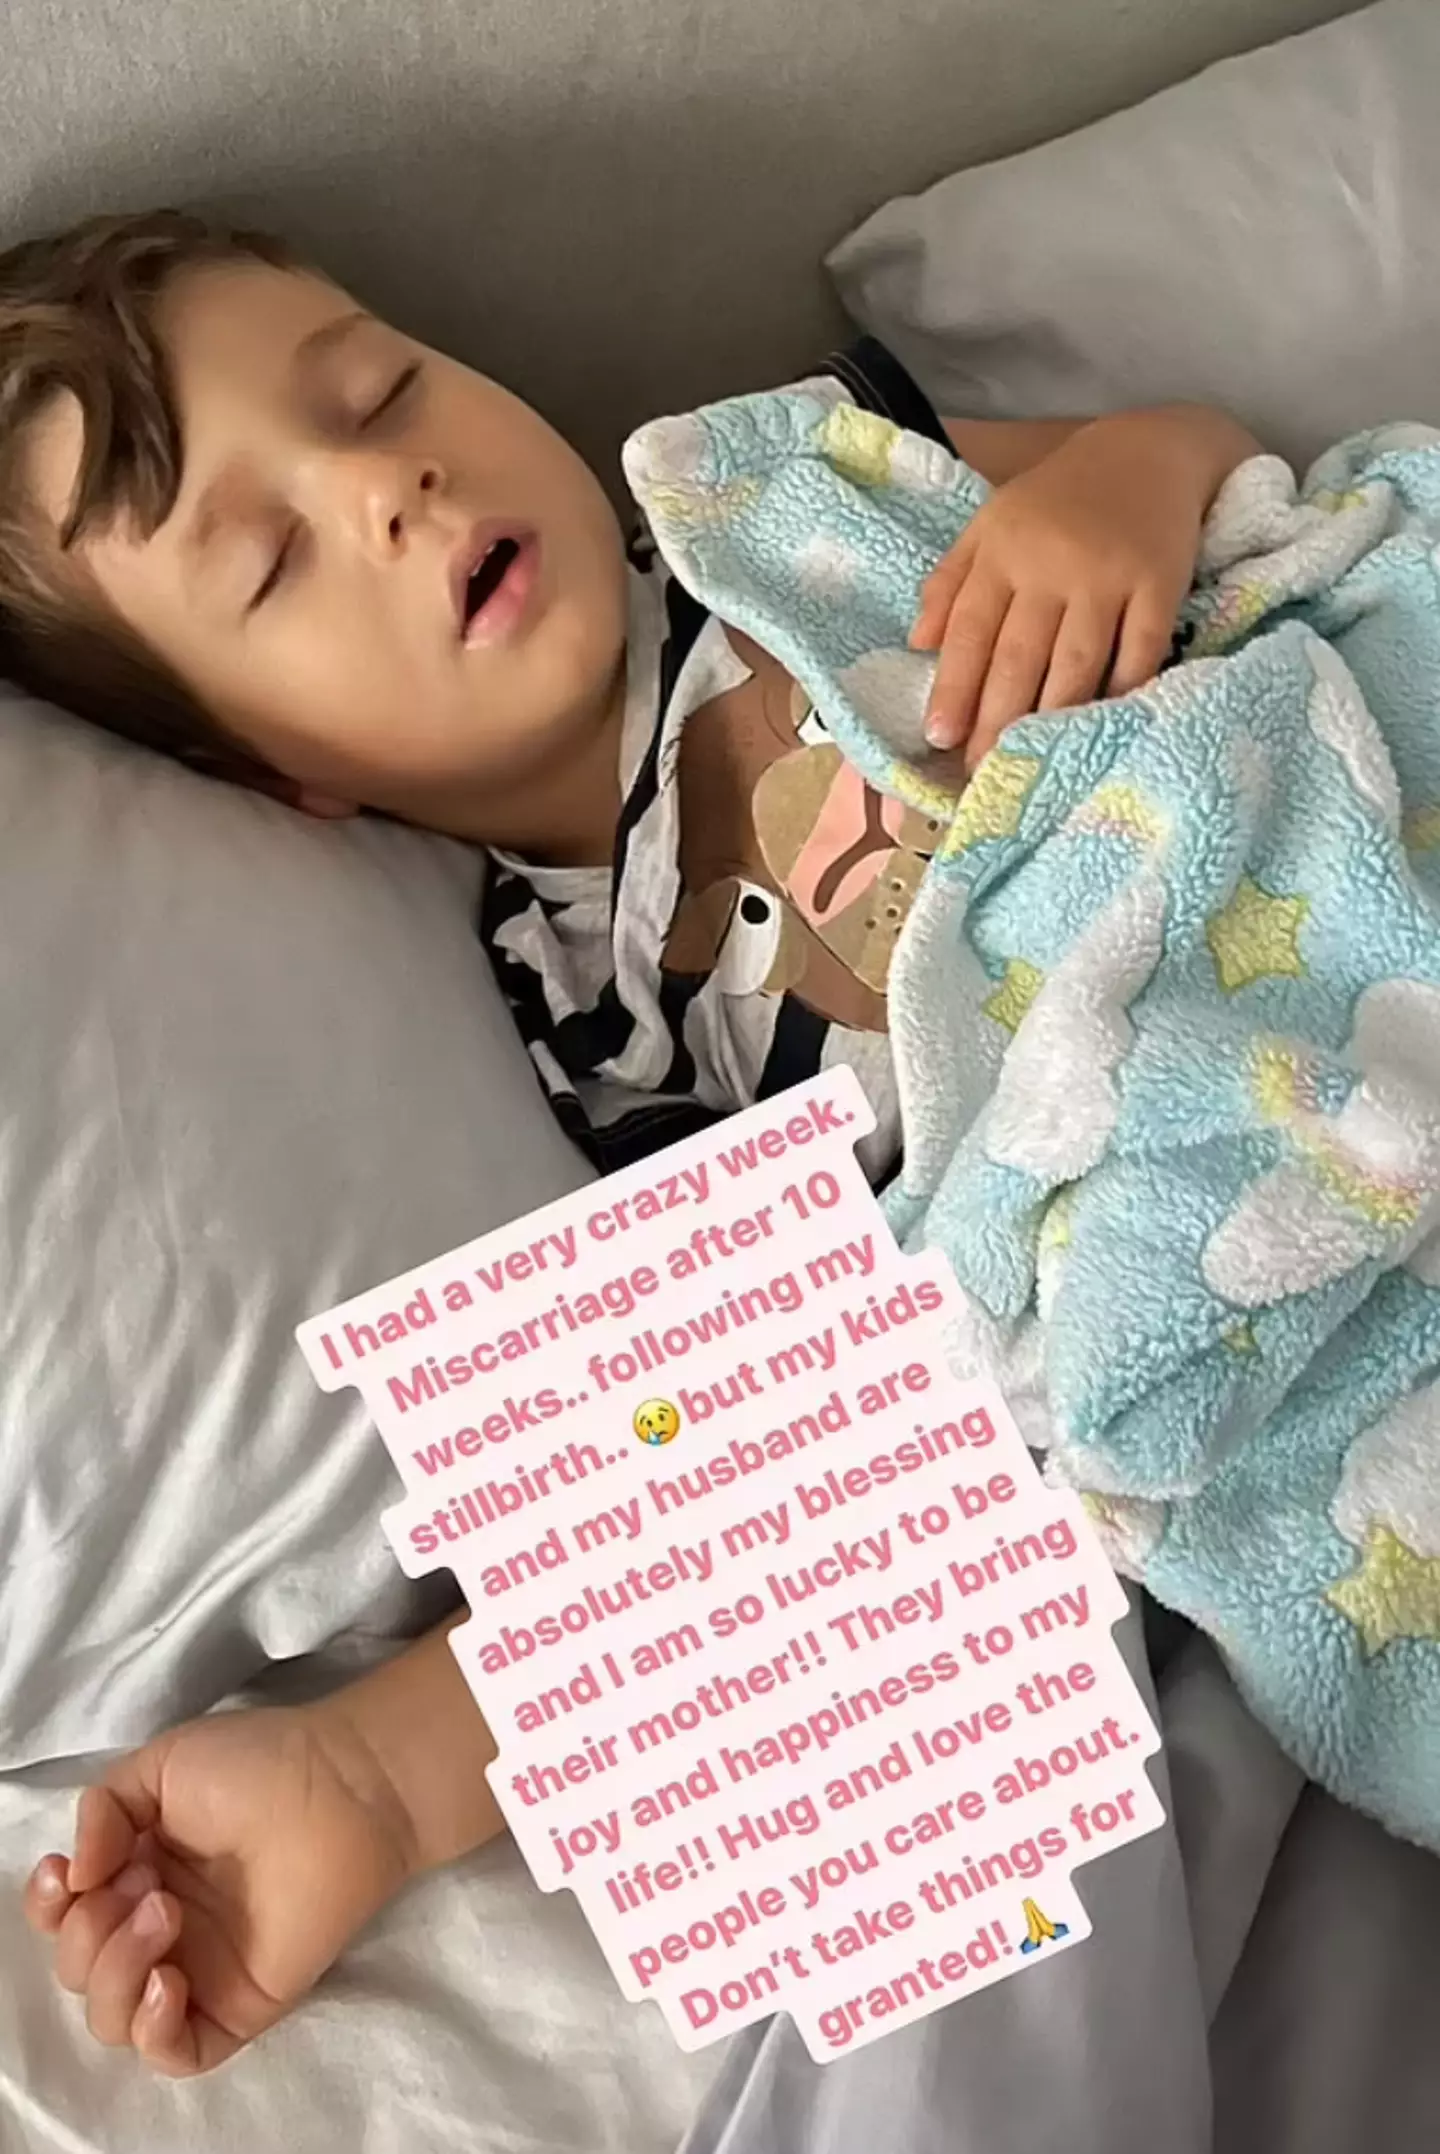 She revealed the sad news on Instagram.